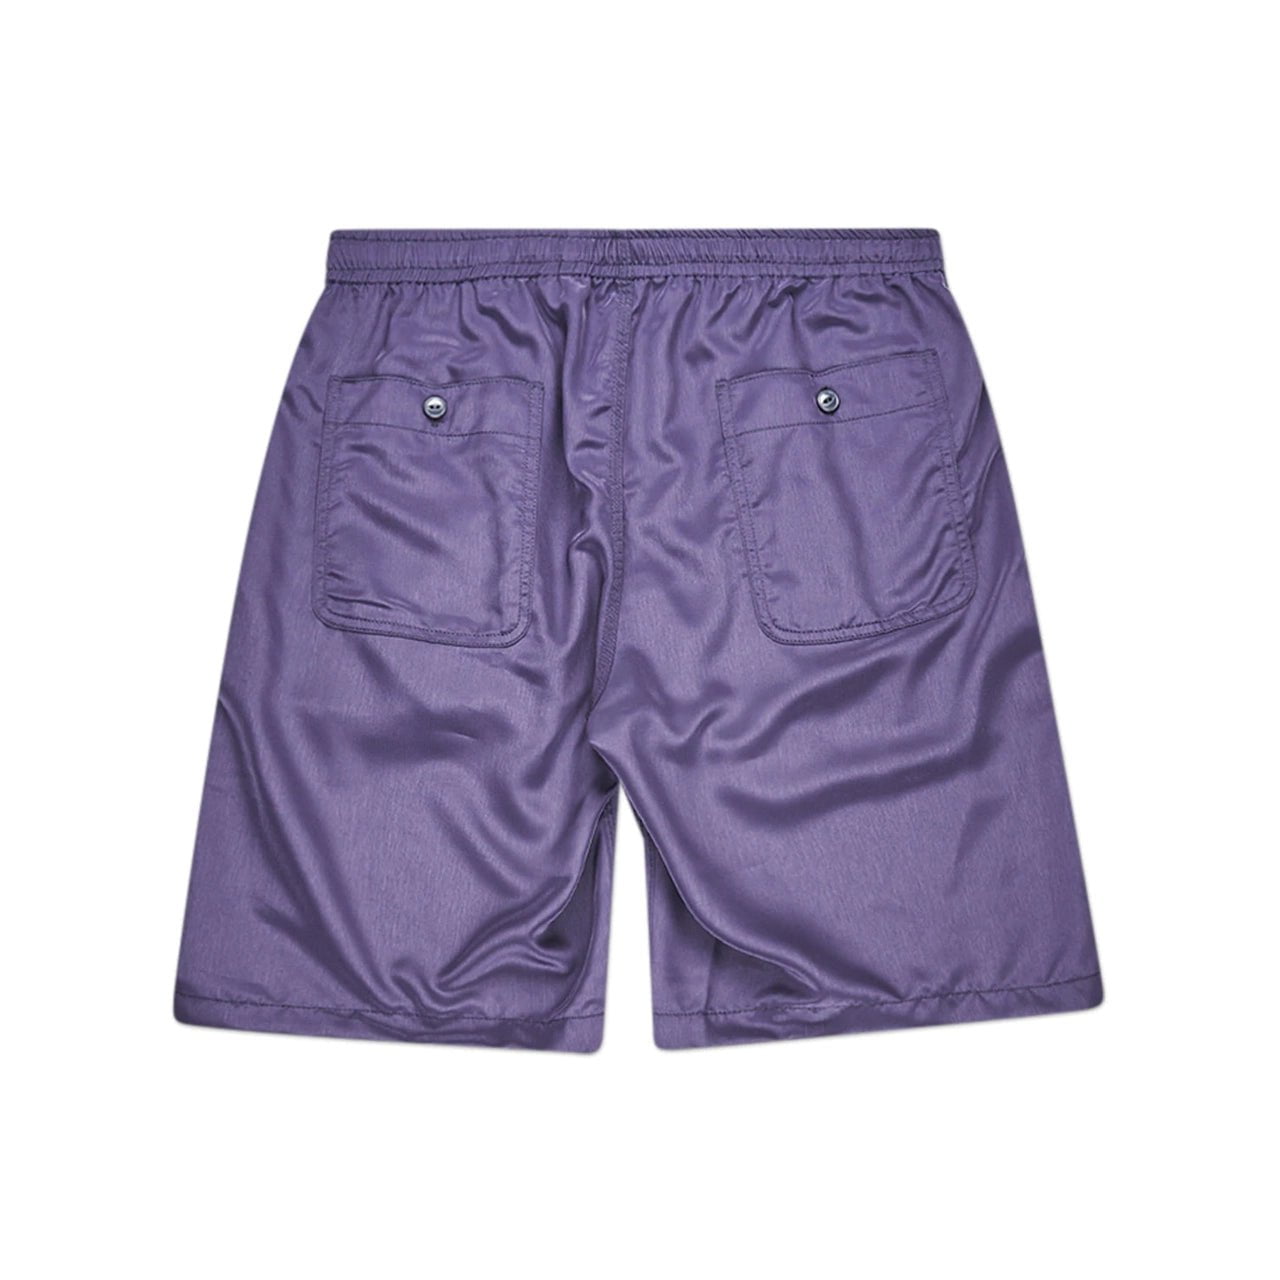 needles basketball shorts (smoke purple) KP181 - a.plus